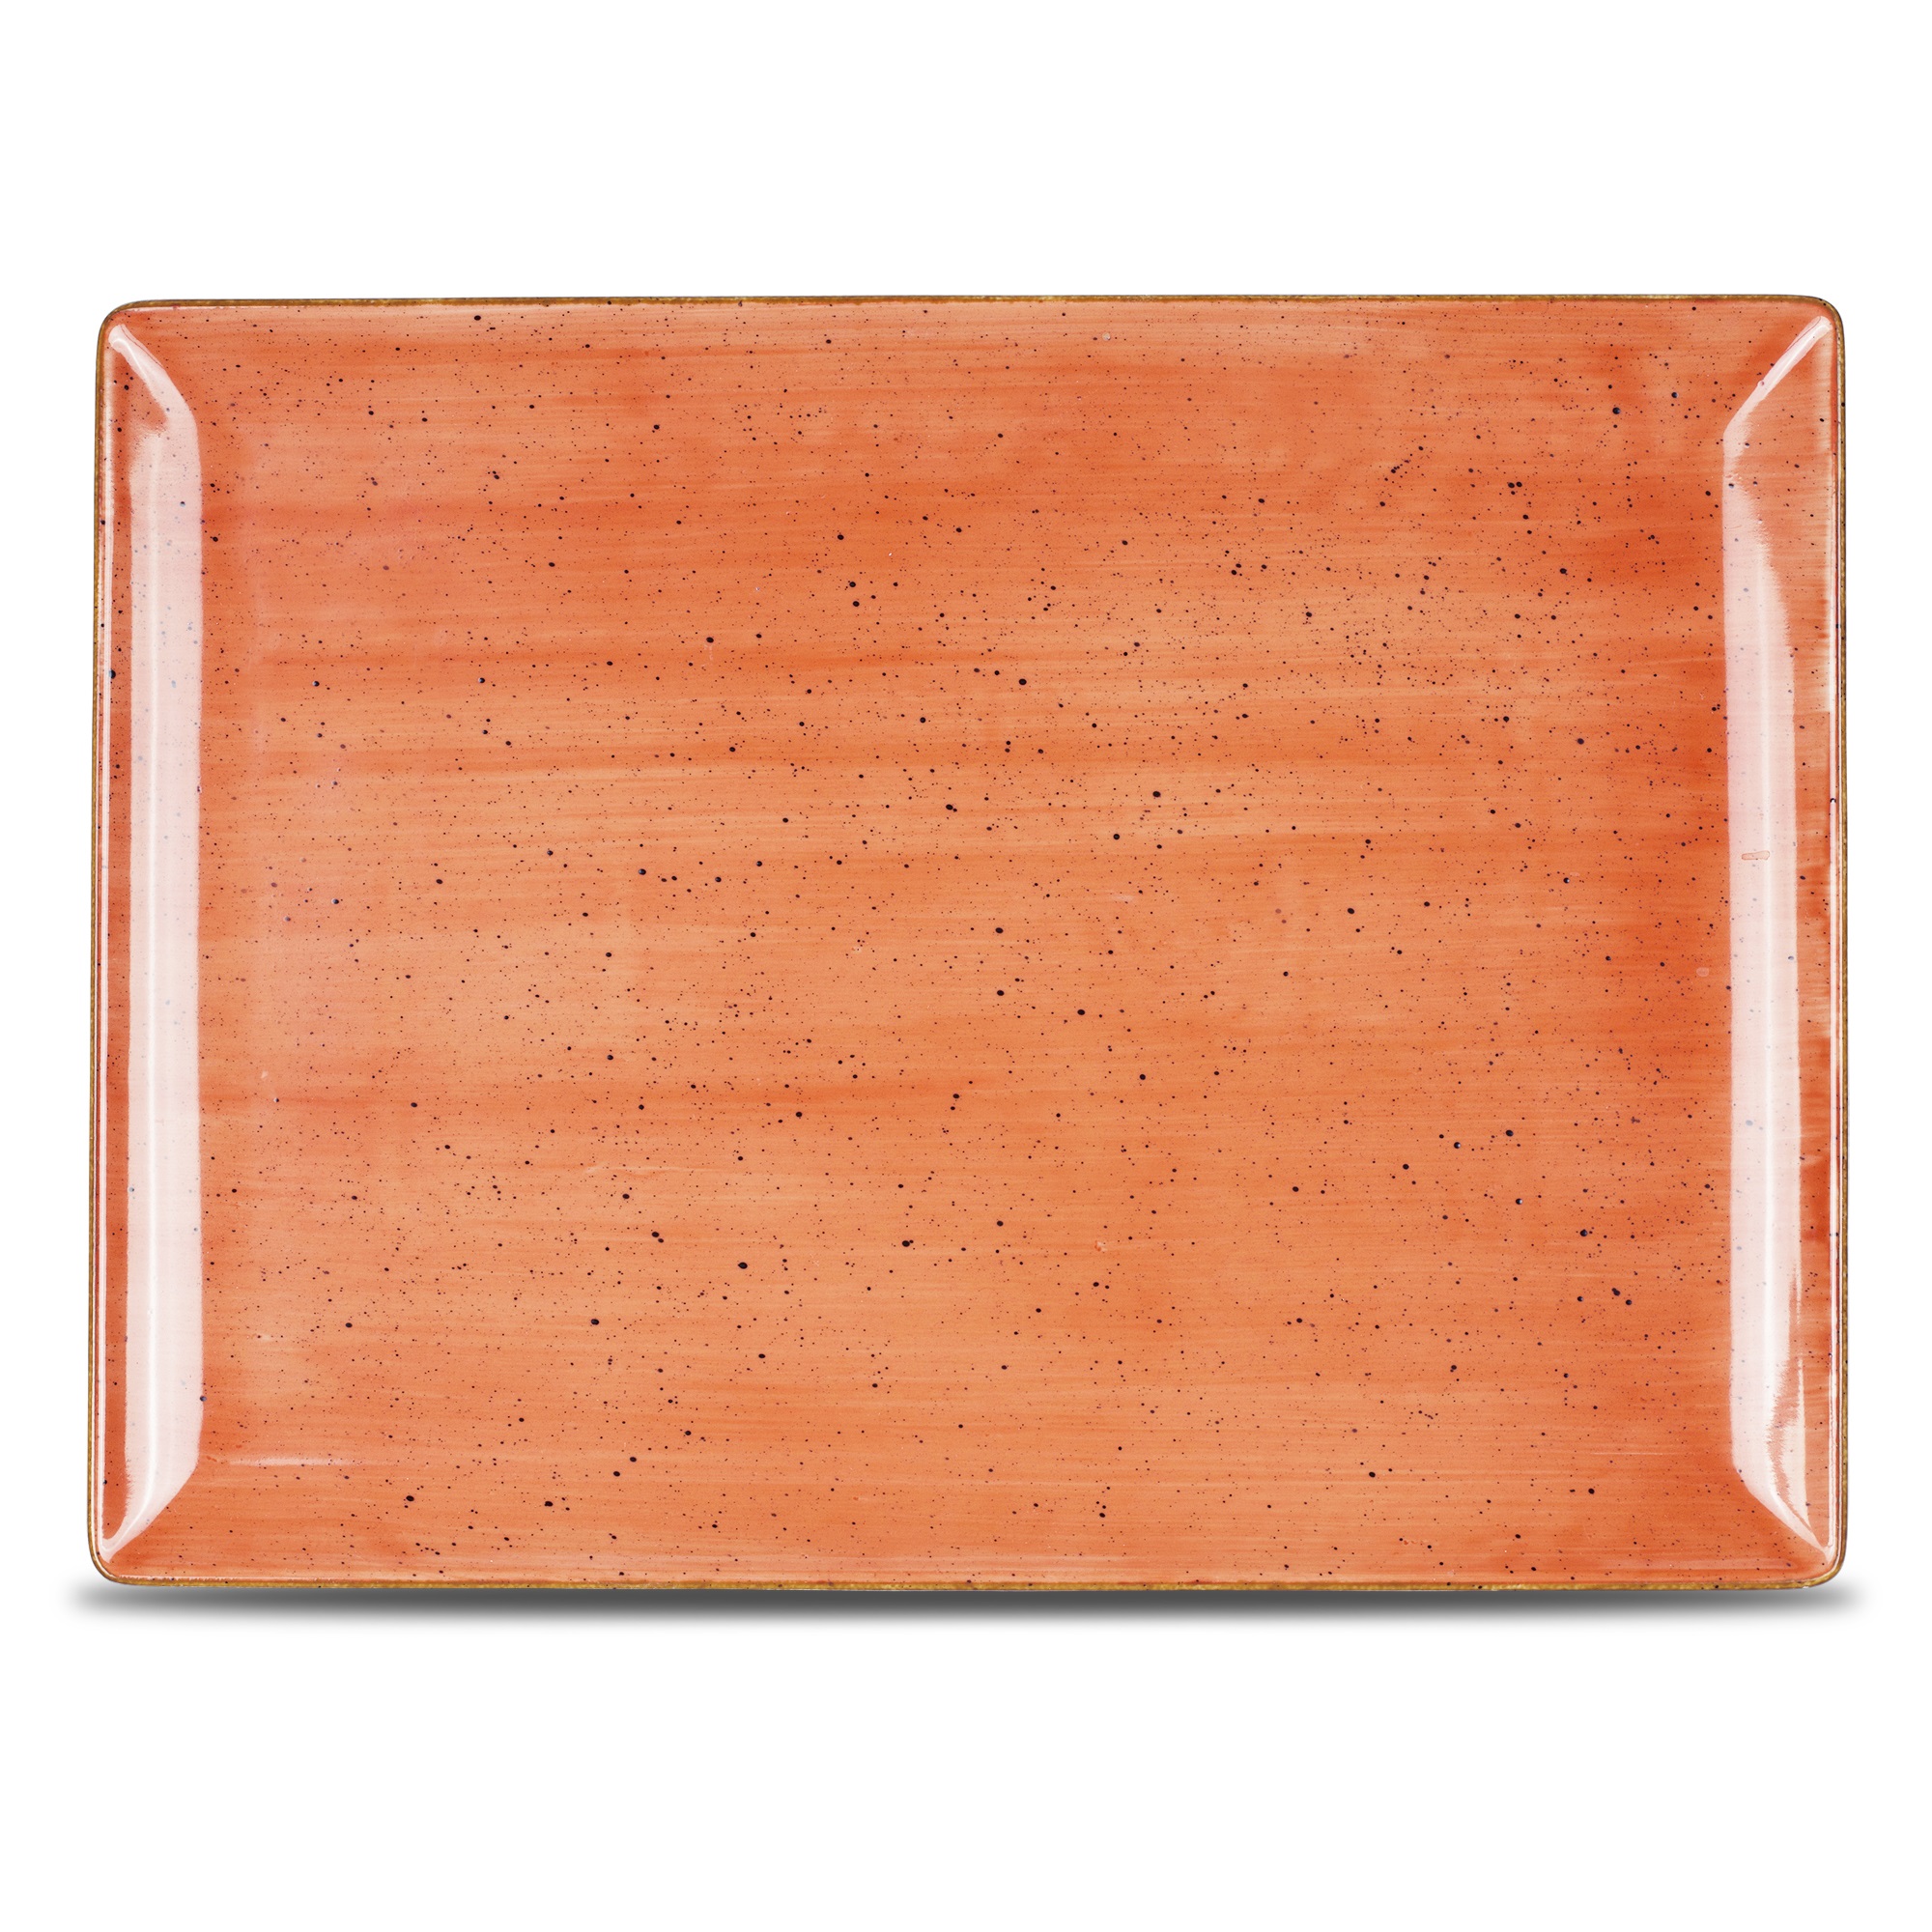 Platte eckig 35,5x26,5cm CLASSIC sunset red